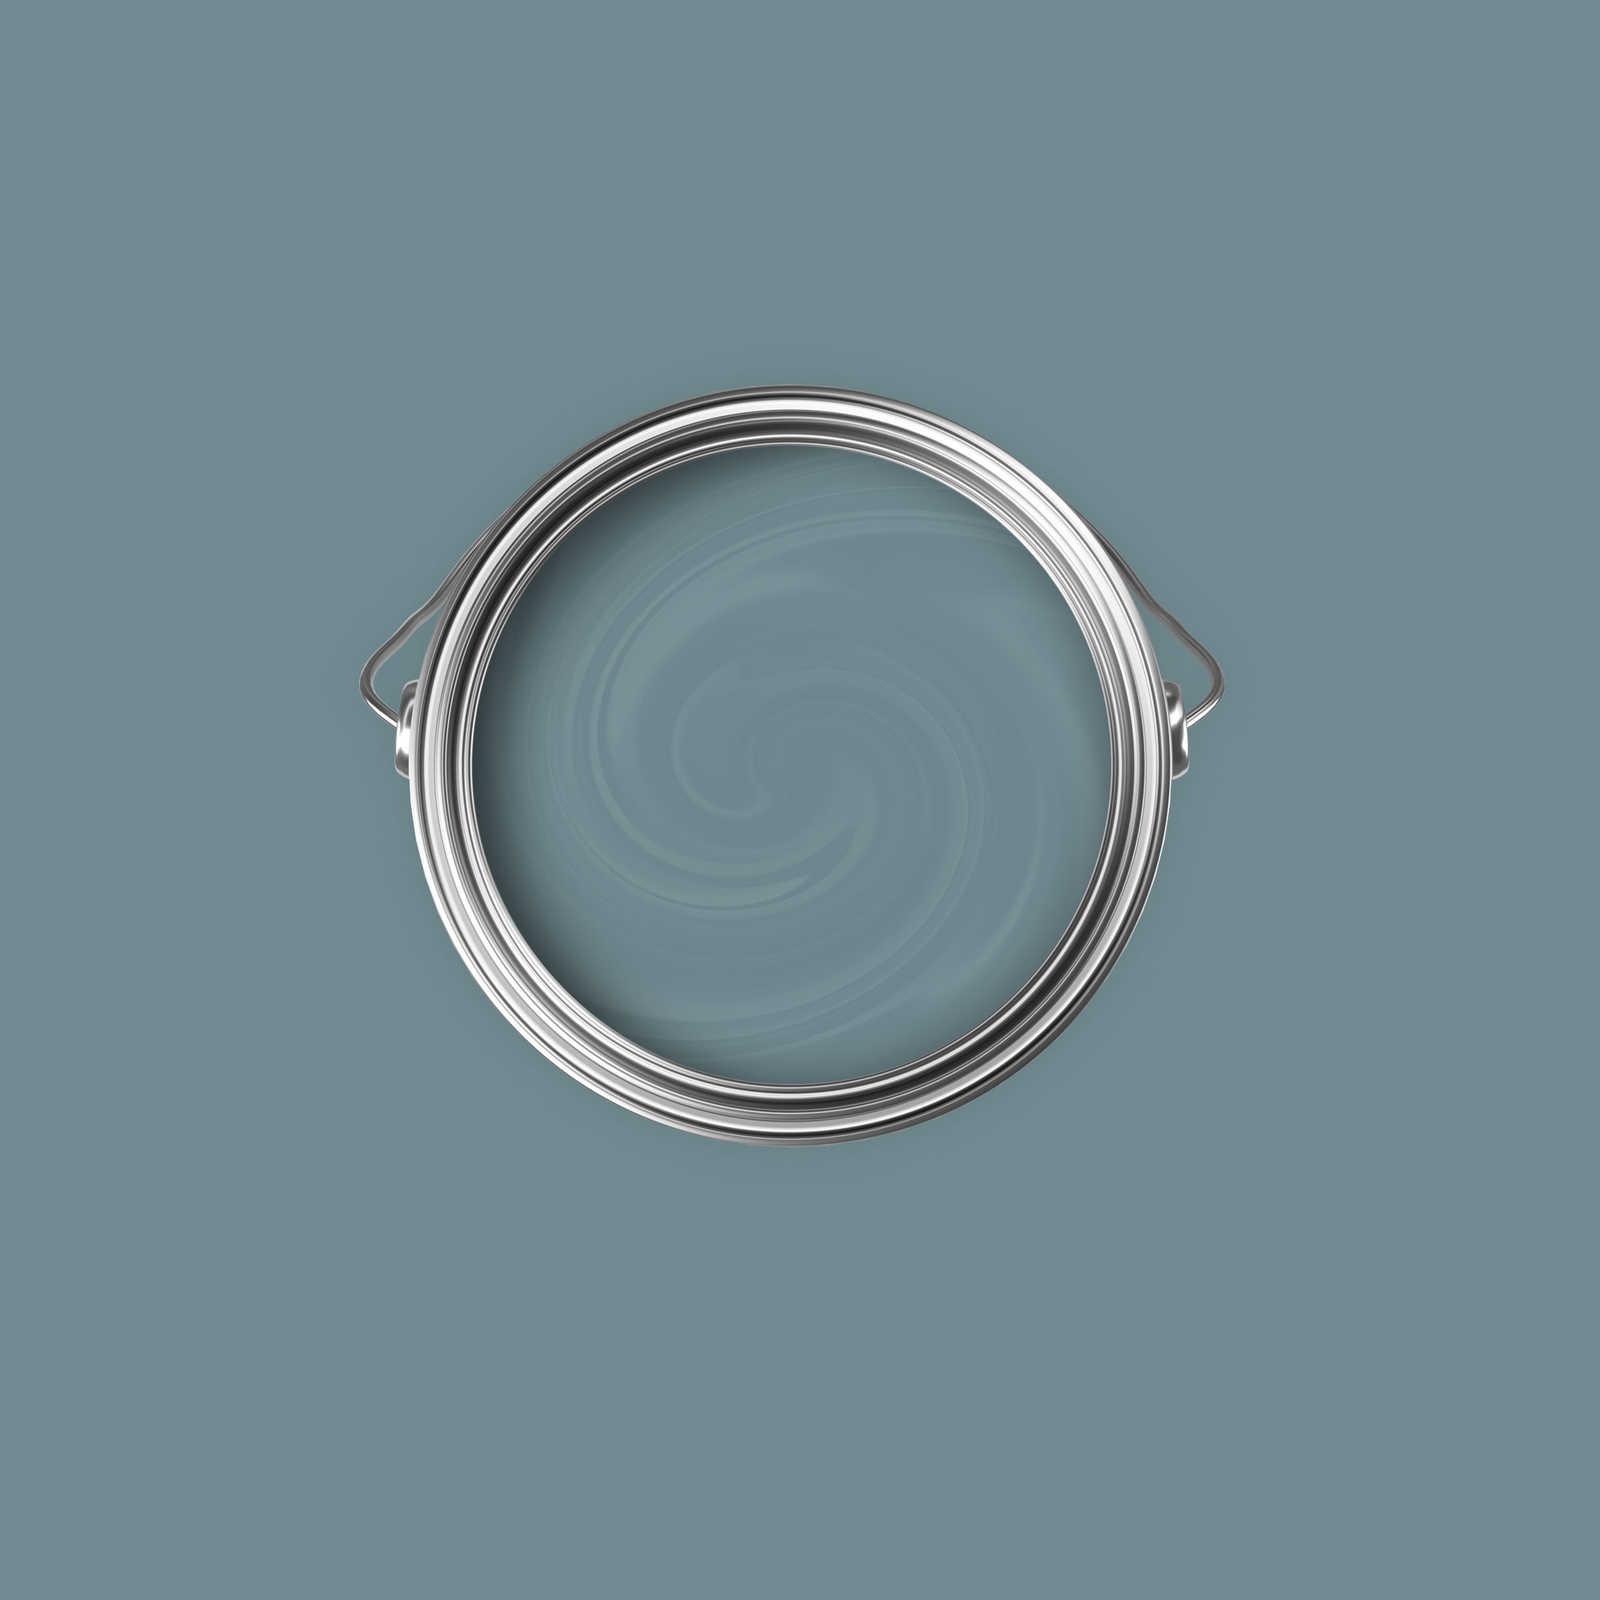             Premium Wandfarbe entspannendes Taubenblau »Balanced Blue« NW311 – 2,5 Liter
        